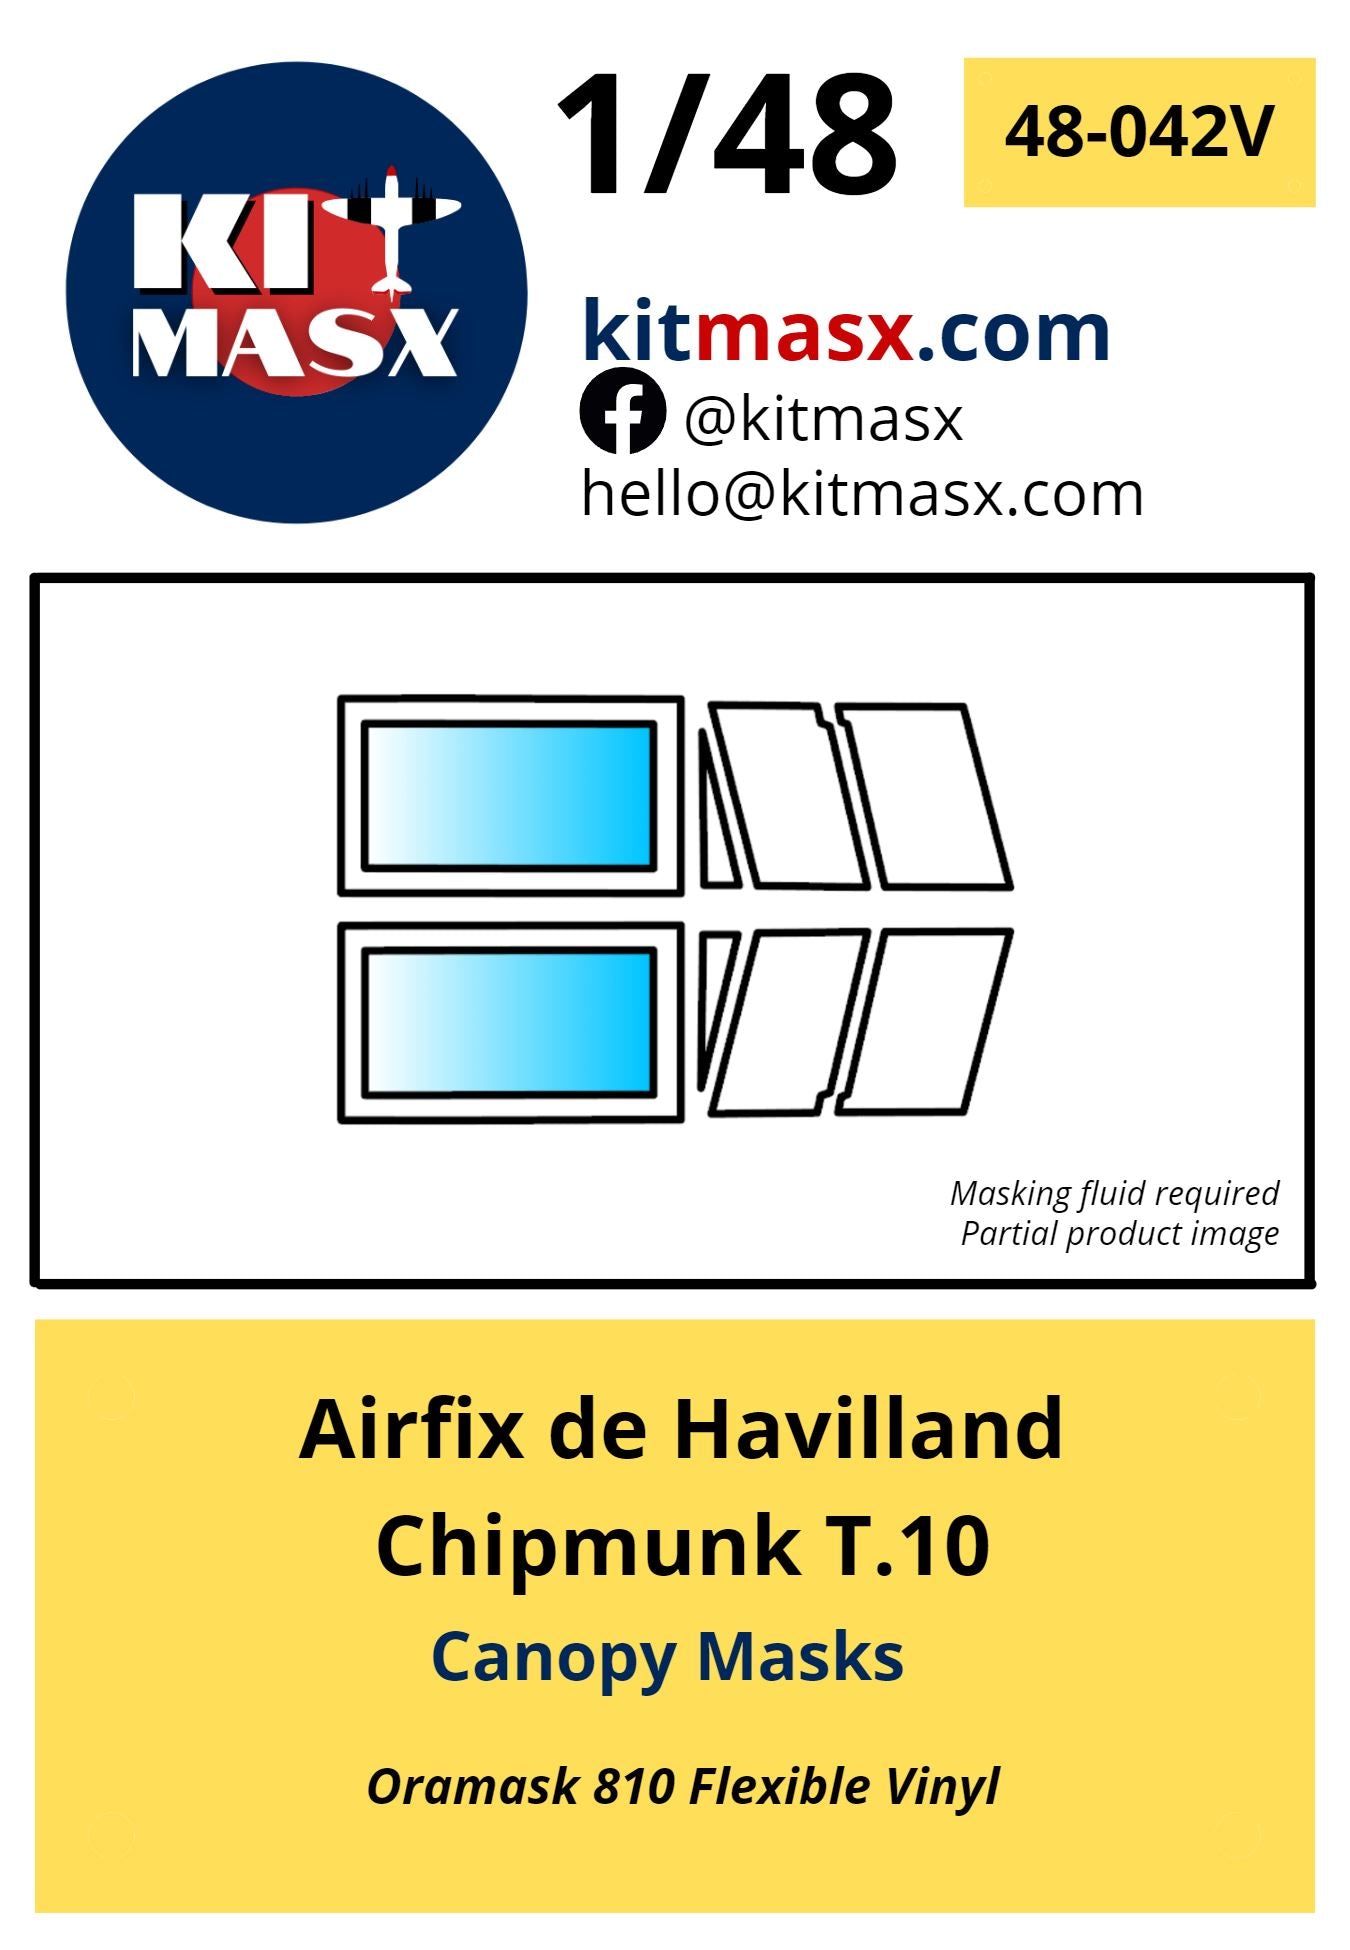 Airfix de Havilland Chipmunk T.10 Canopy Masks Kit Masx 